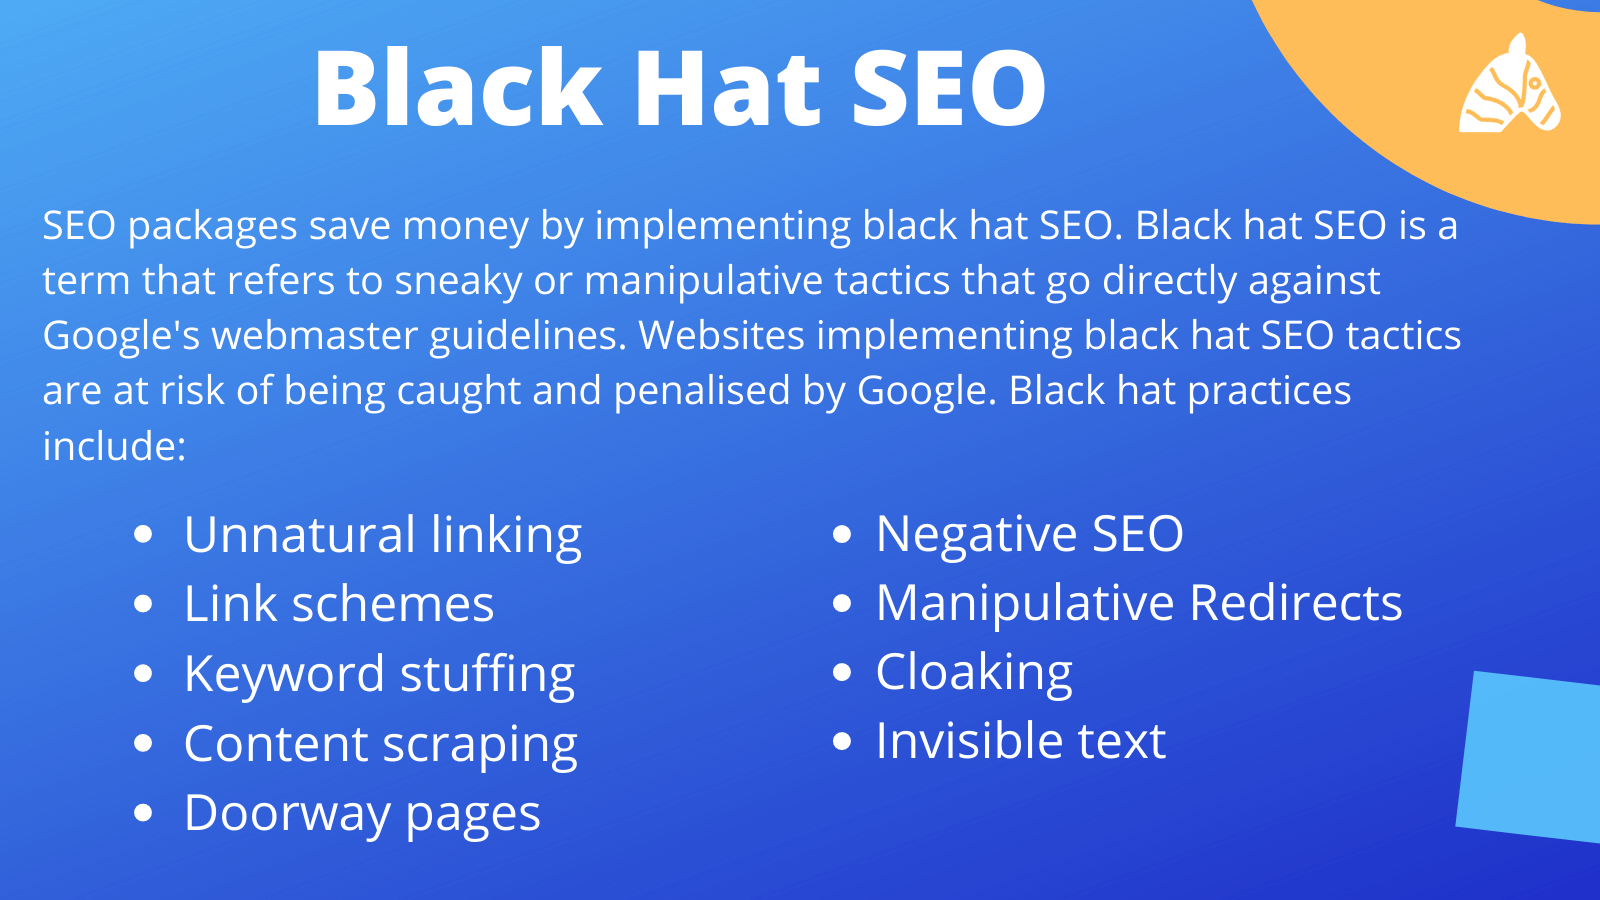 SEO packages black hat tactics information